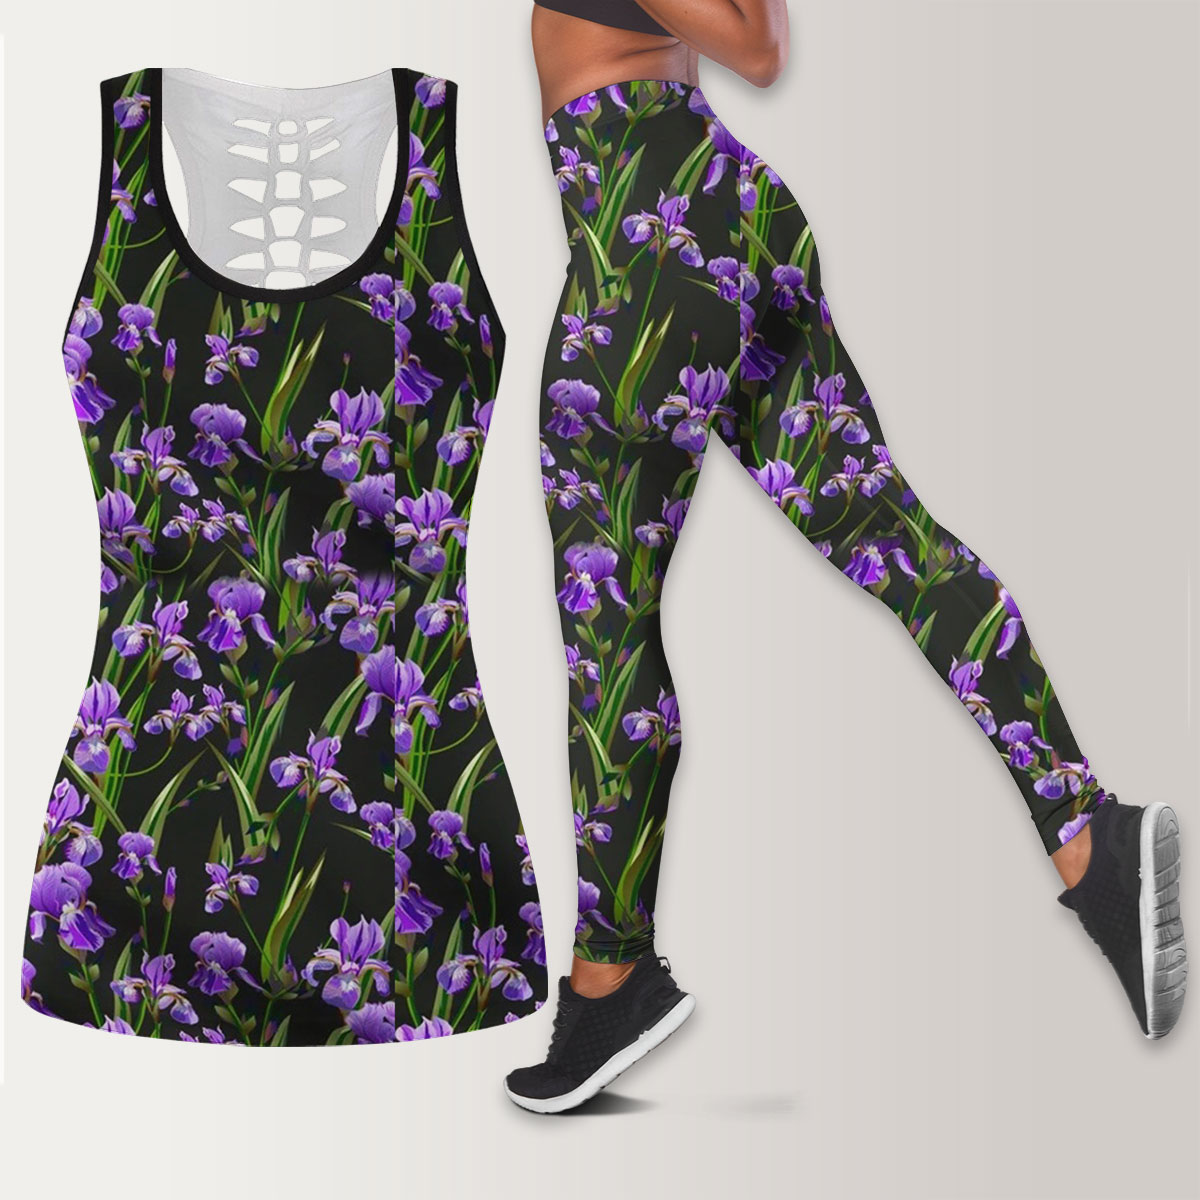 Purple Iris On Black Background Legging Tank Top set